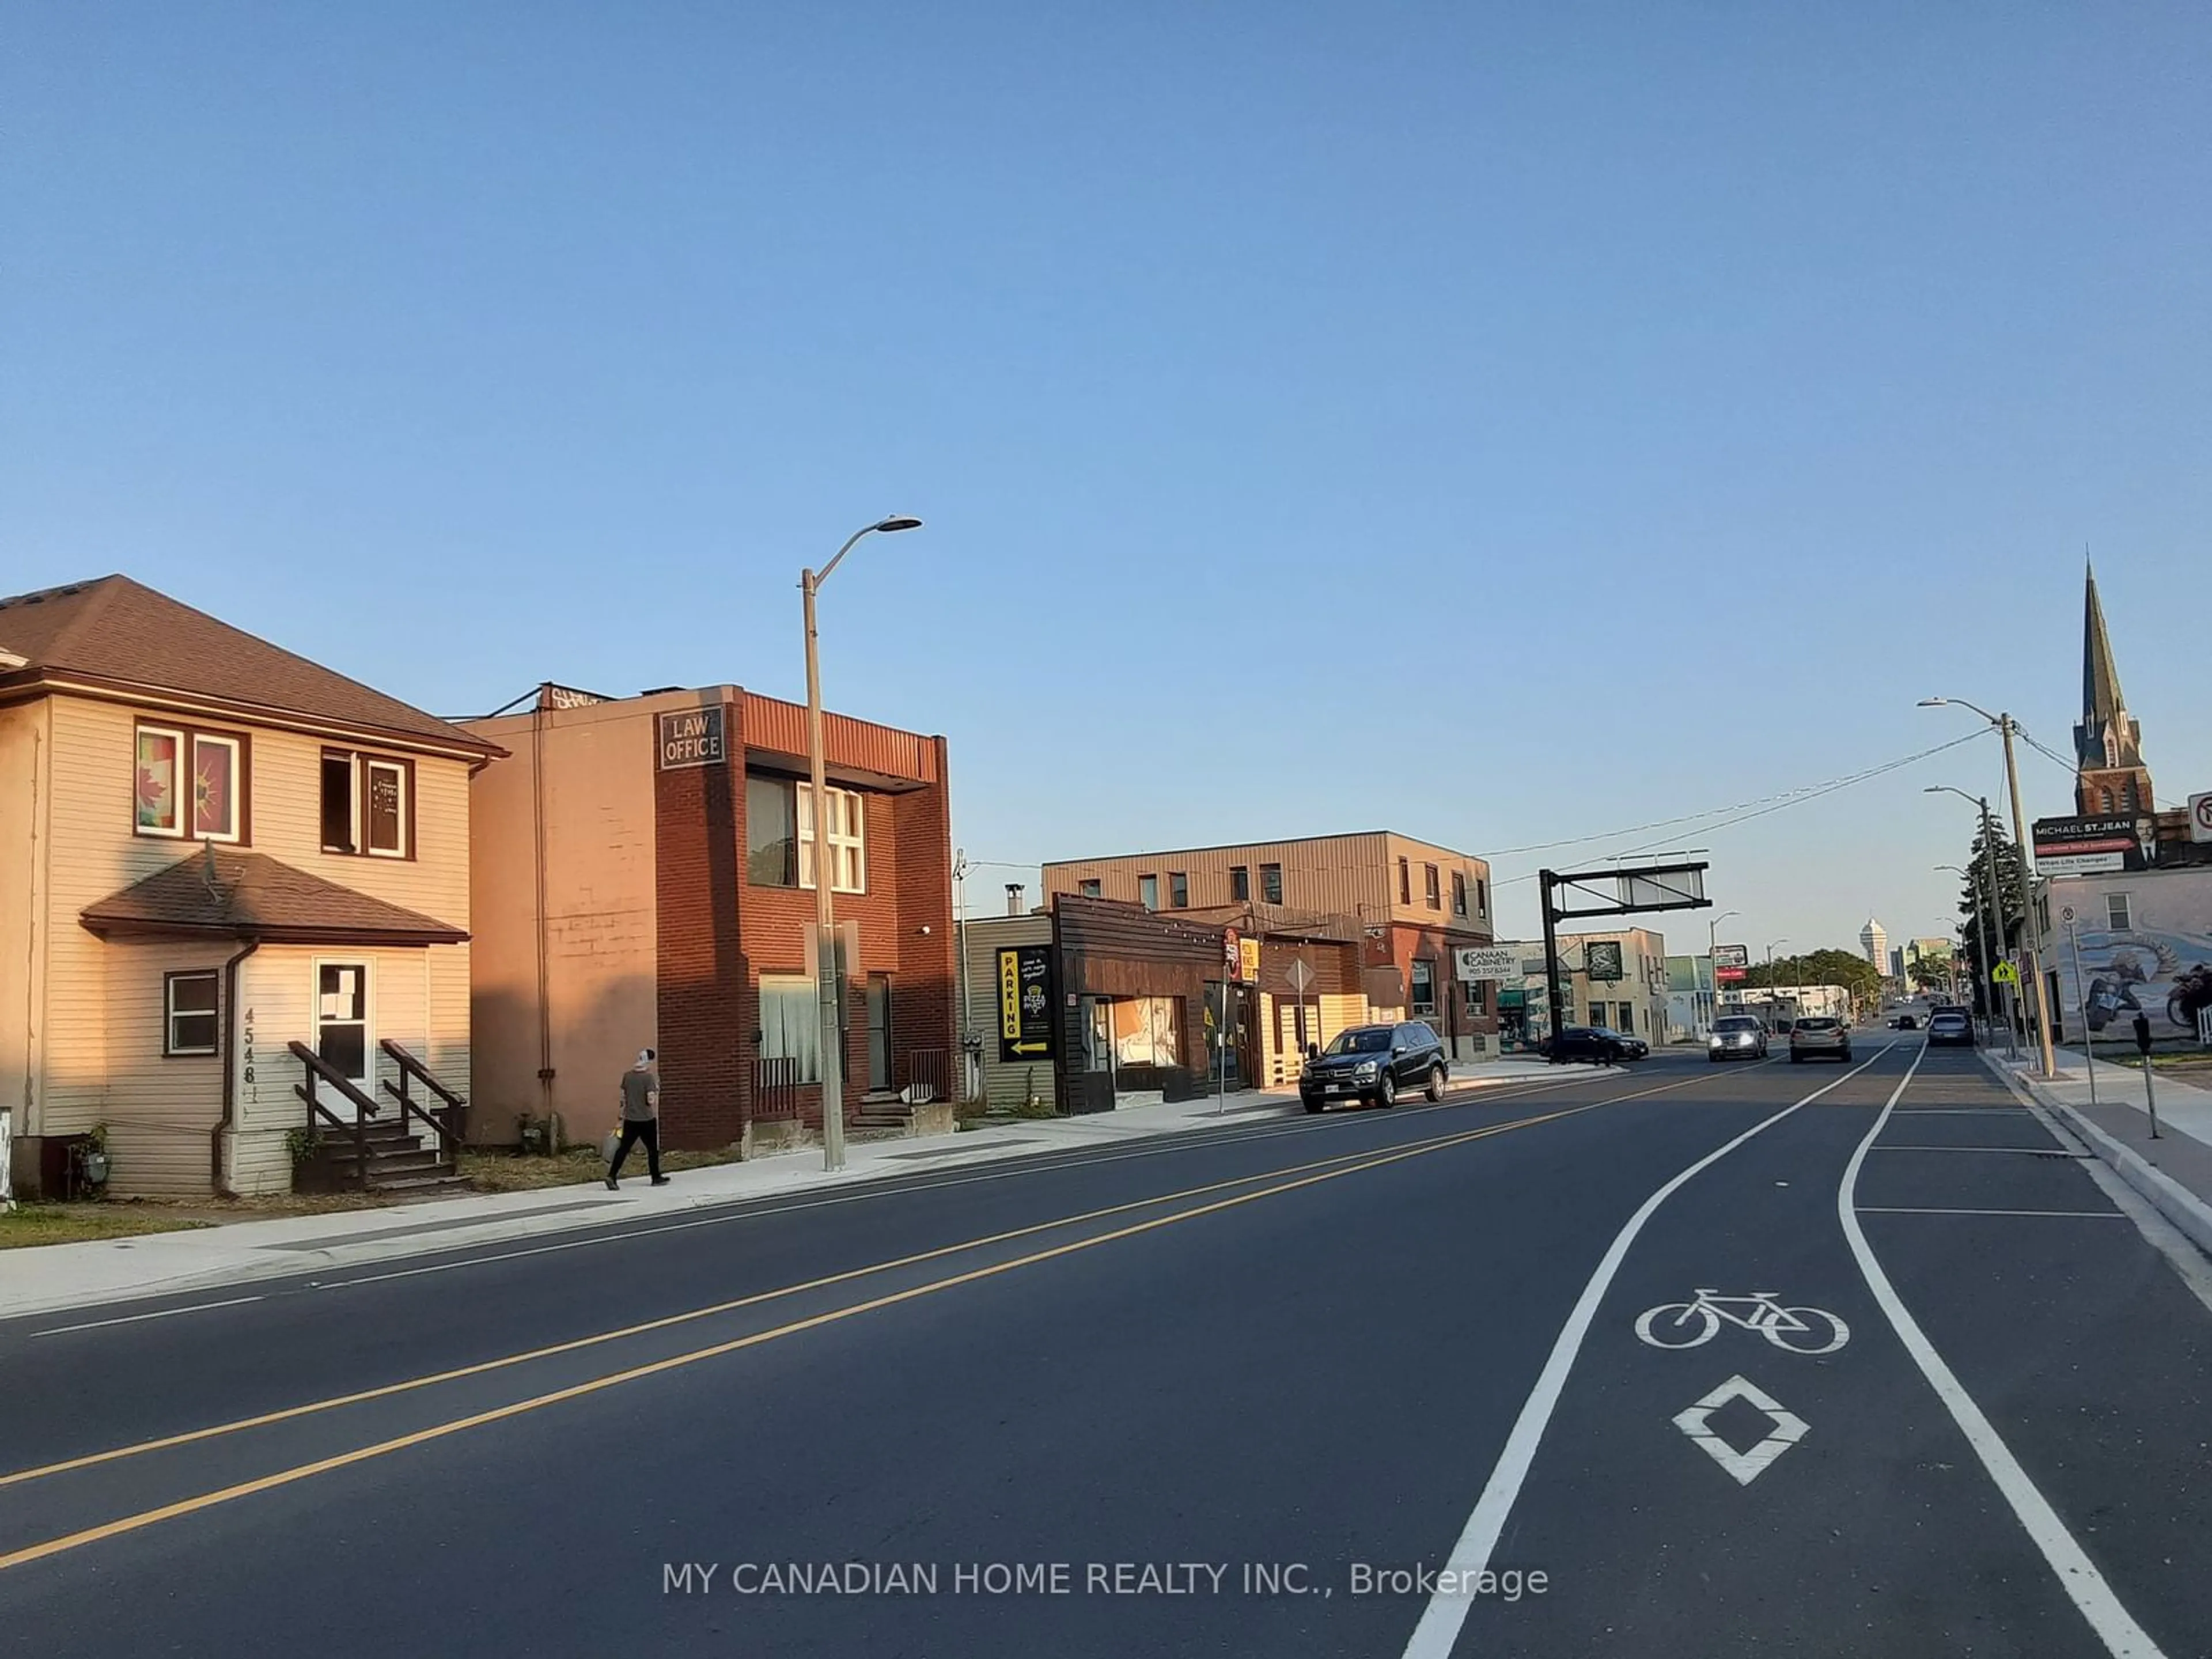 A view of a street for 4548 Victoria Ave, Niagara Falls Ontario L2E 4B6